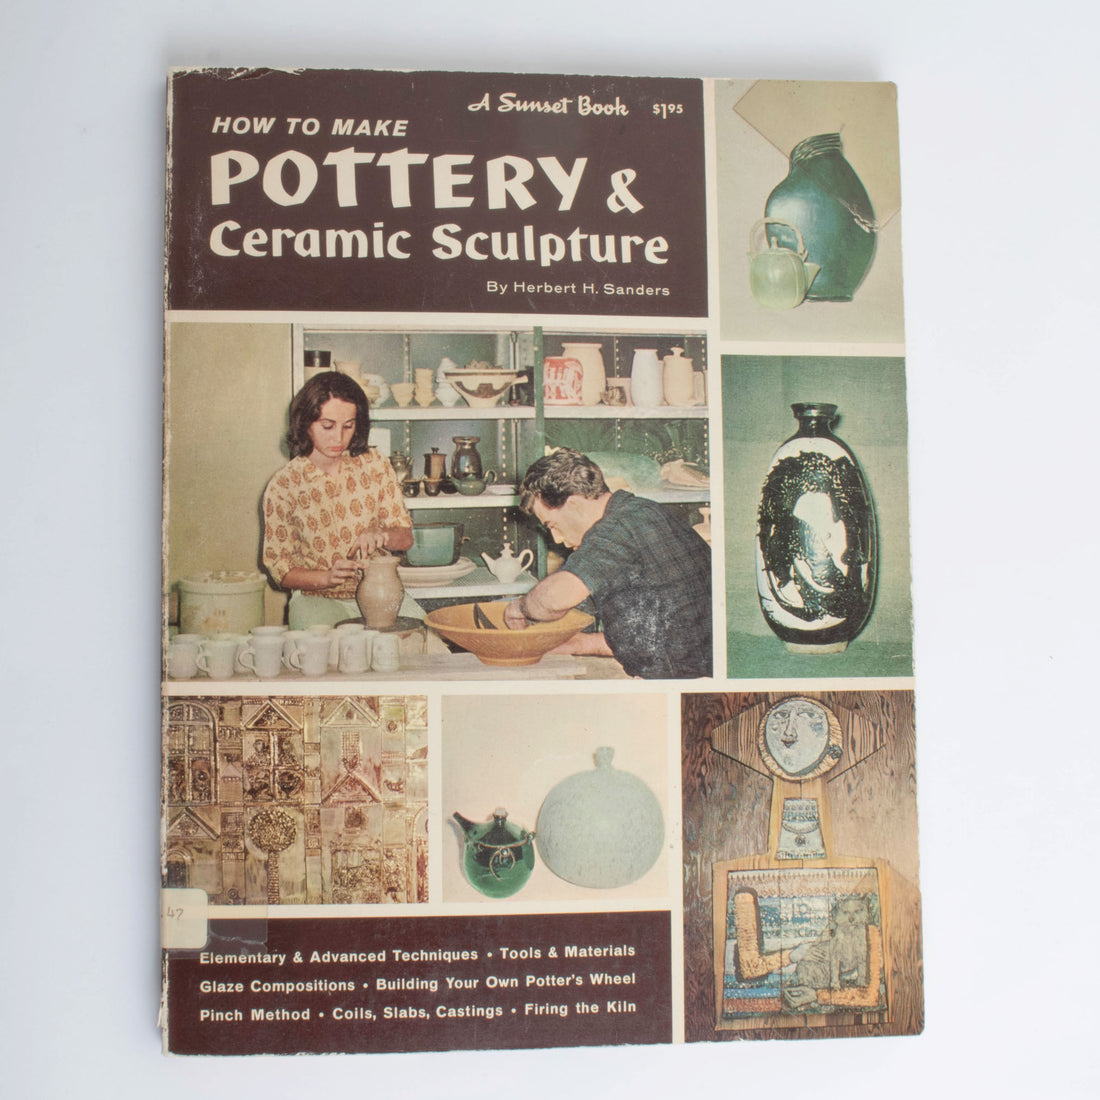 1960s-70s Craft Books